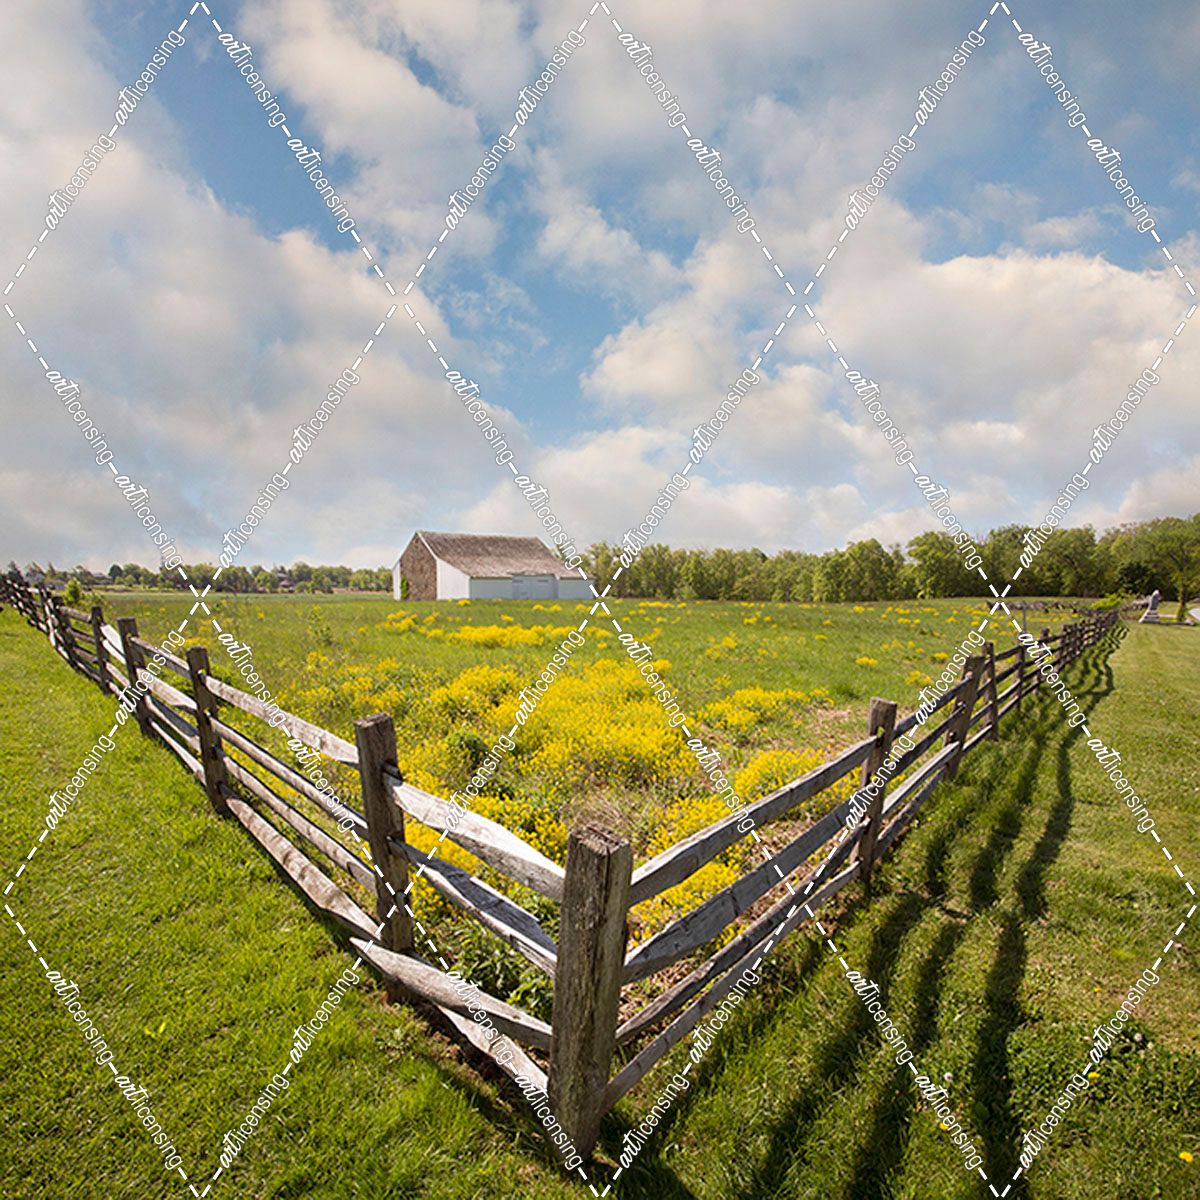 Fence & Farm #2